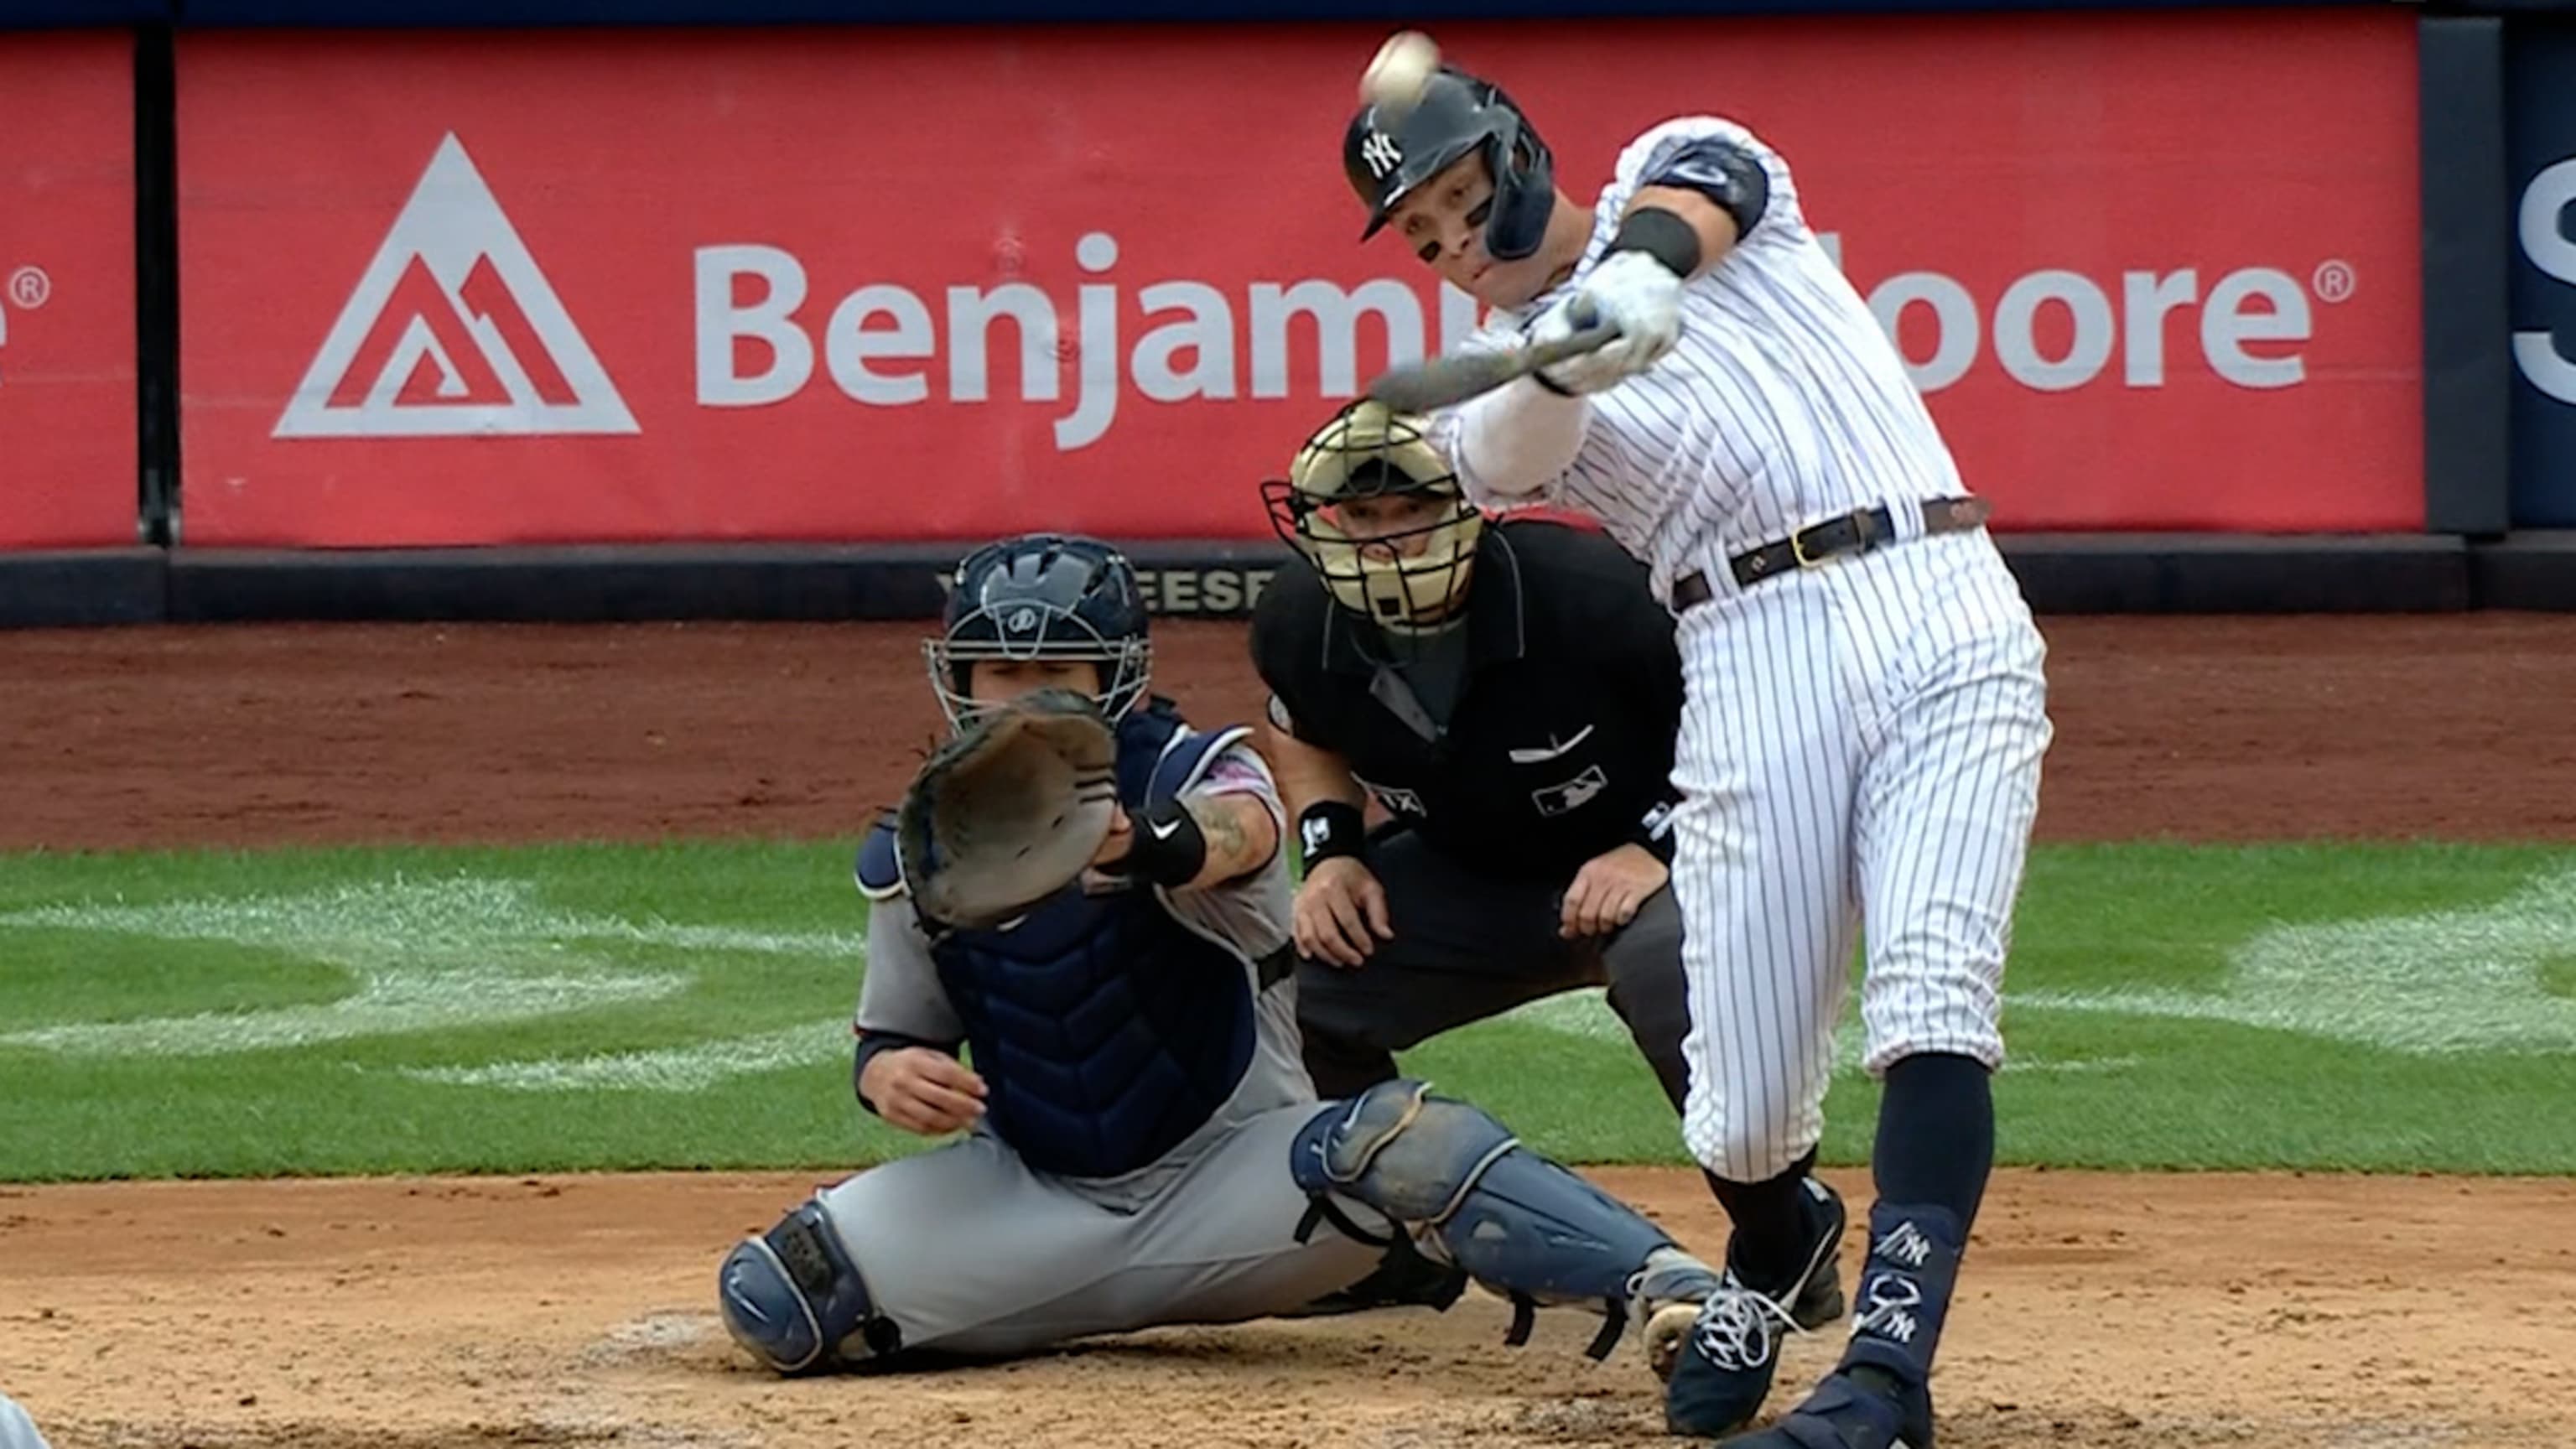 Yankees' Aaron Judge Hits 60th Home Run of Season - The New York Times